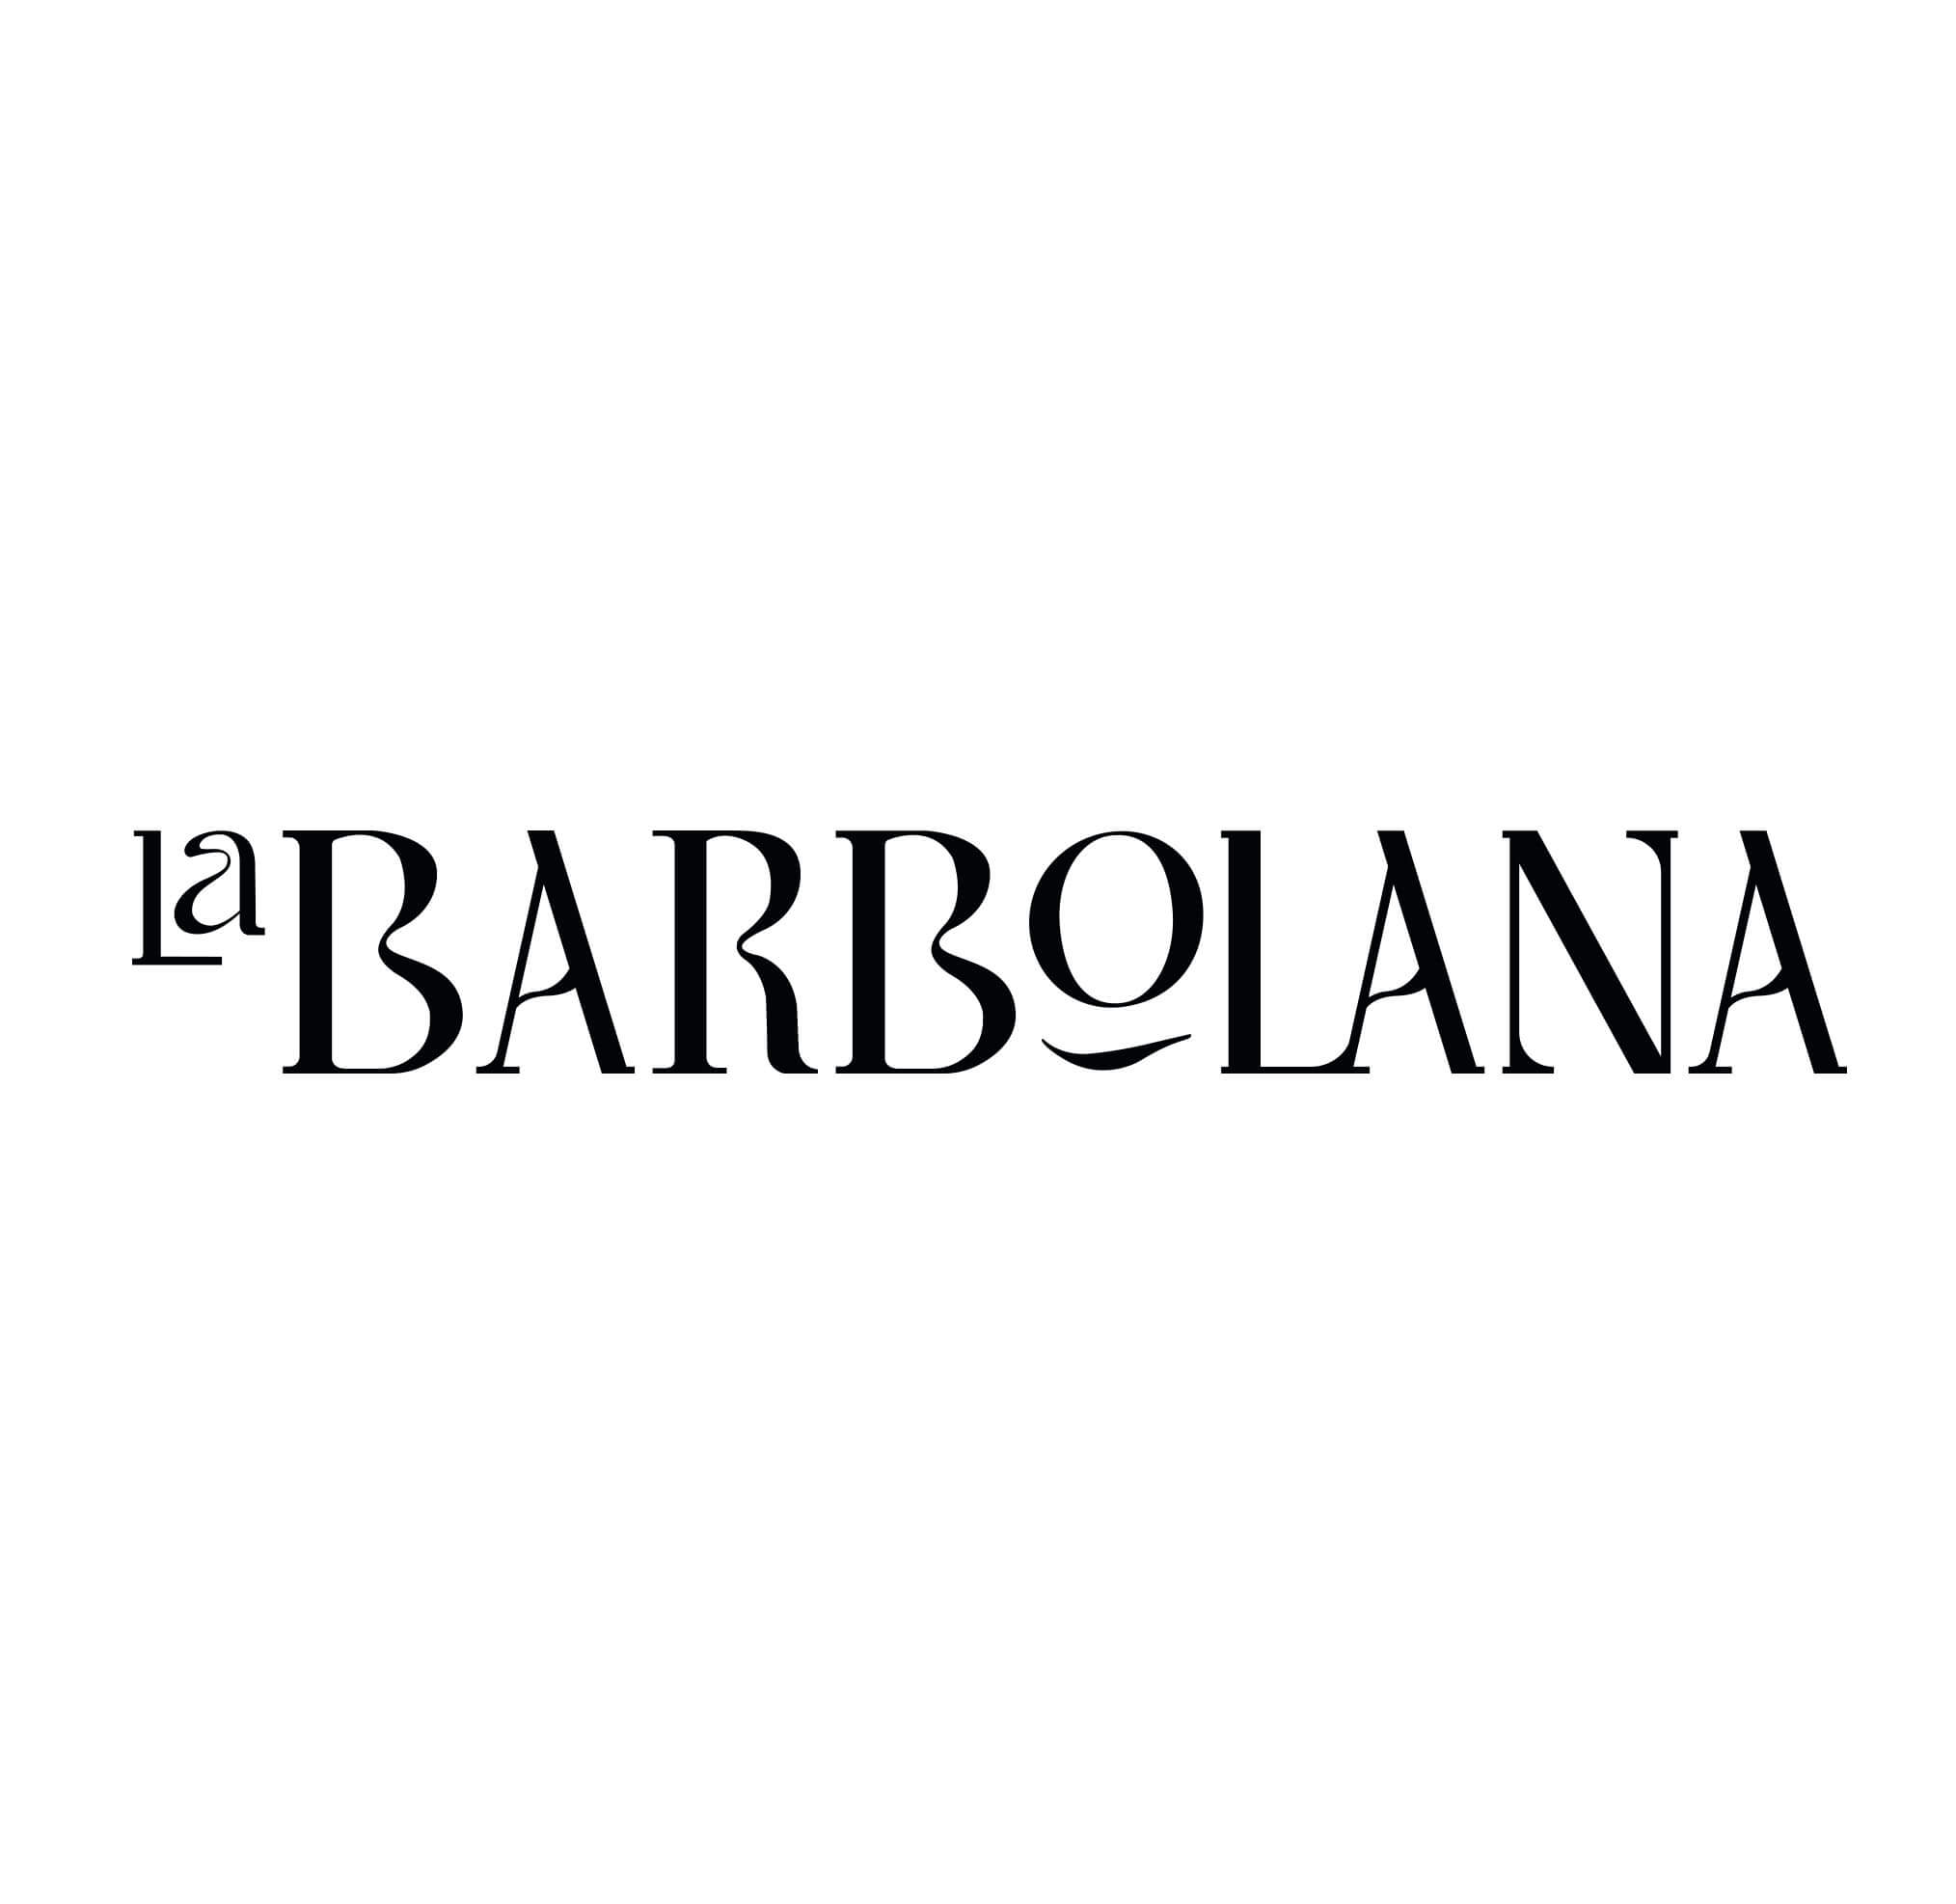 La Barbolana - Logo